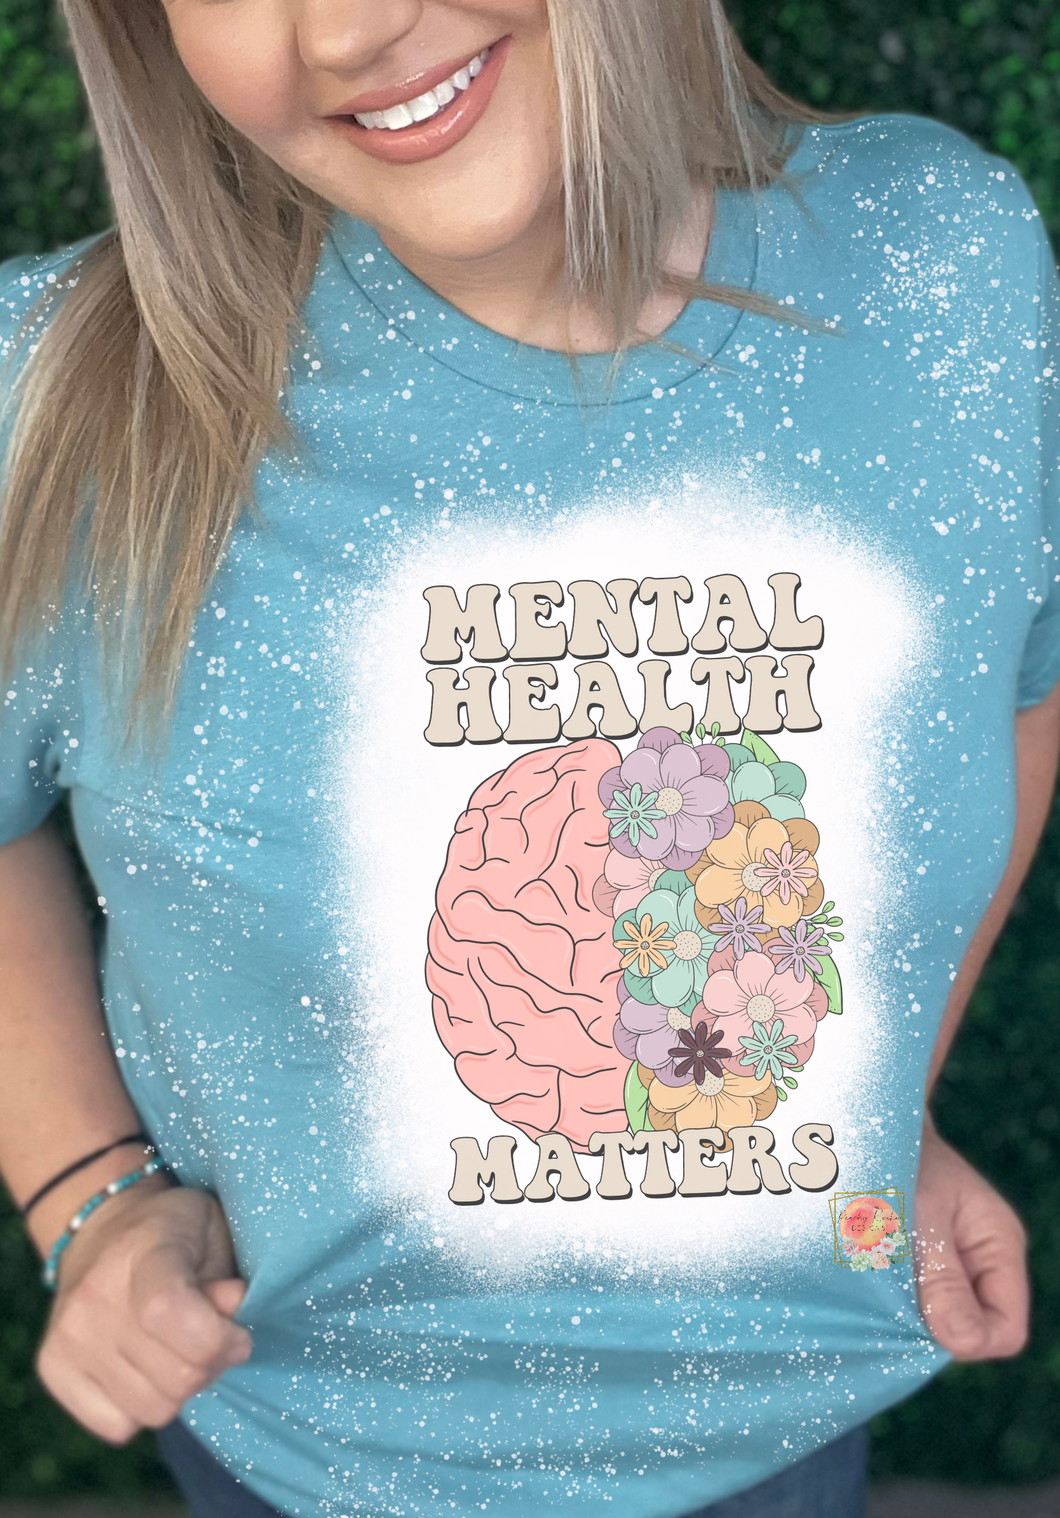 Mental health matters floral brain tee